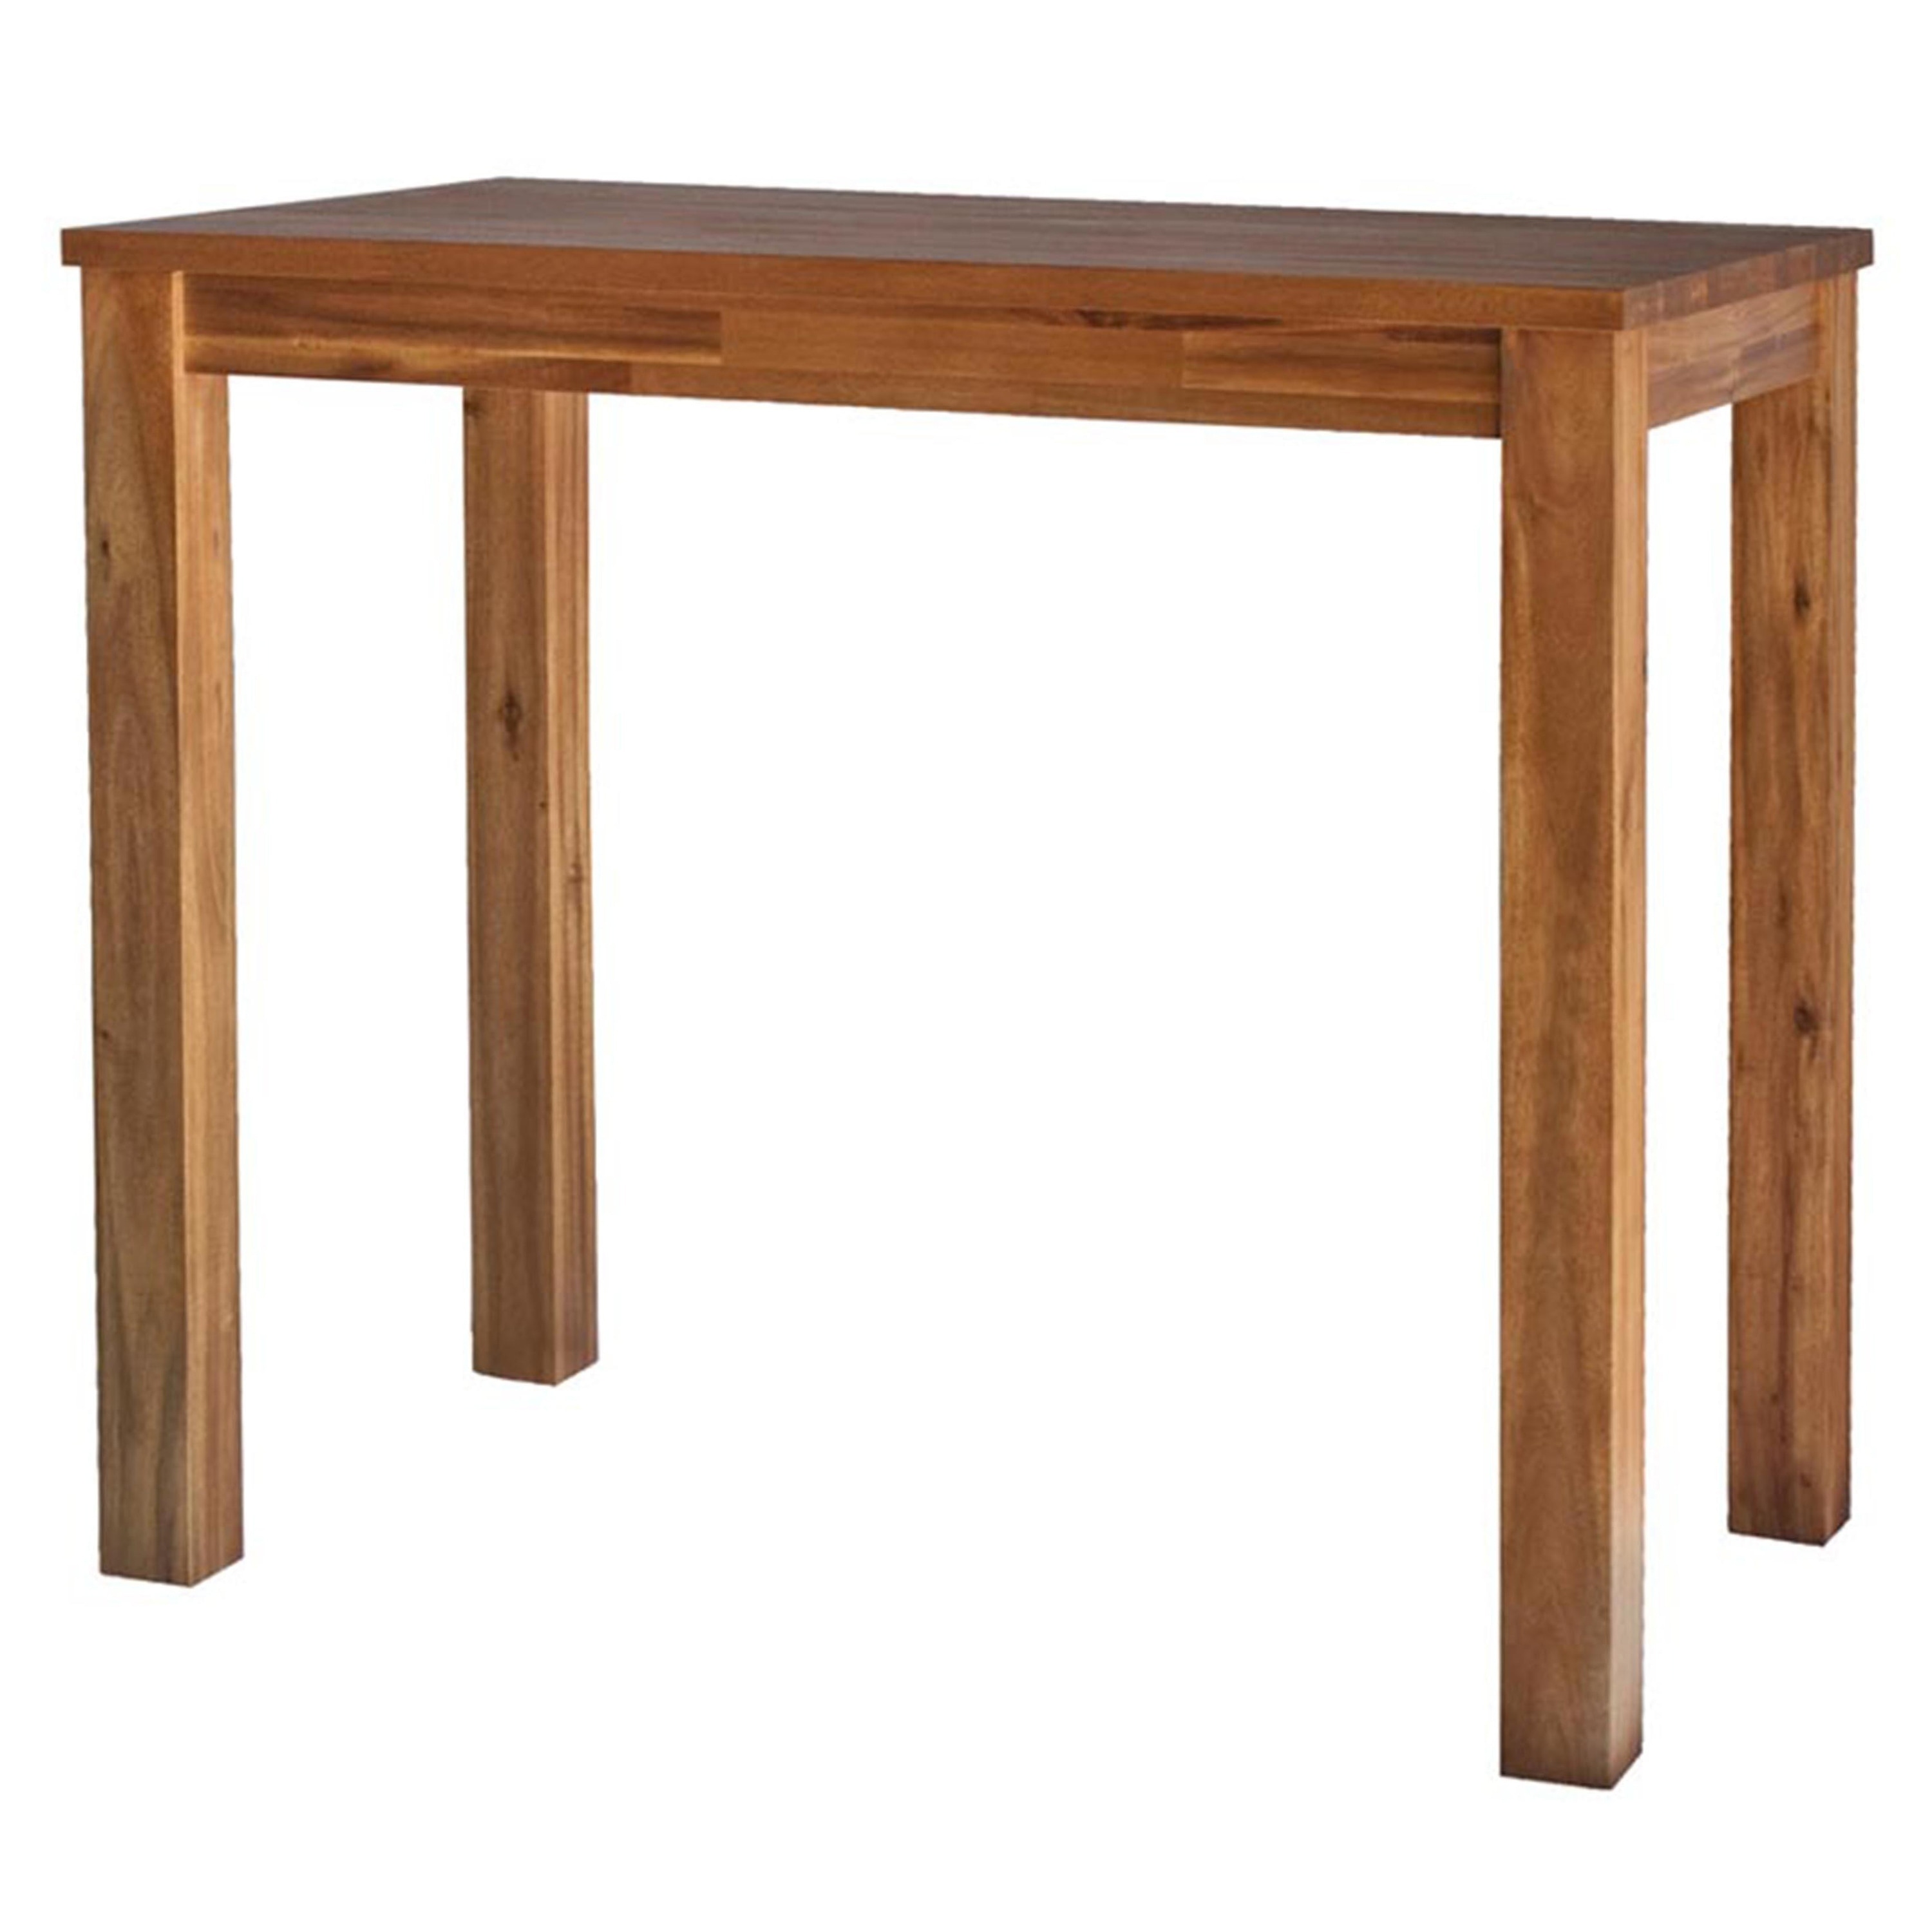 Tiburon Amber Wood 36 Inch Tall Rectangular Table Overstock 27601460